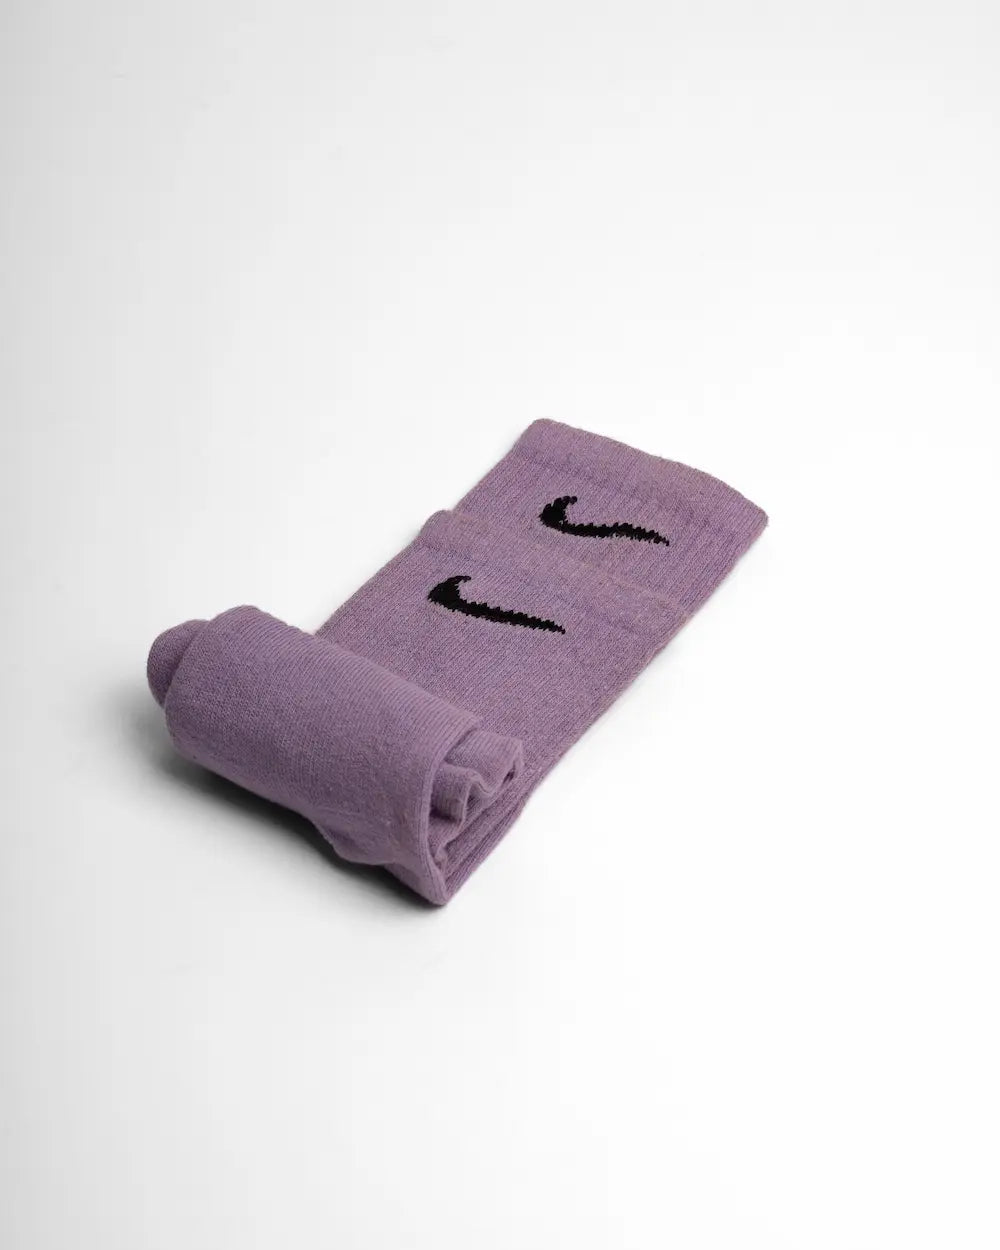 Calzini Nike custom, tintura colore viola